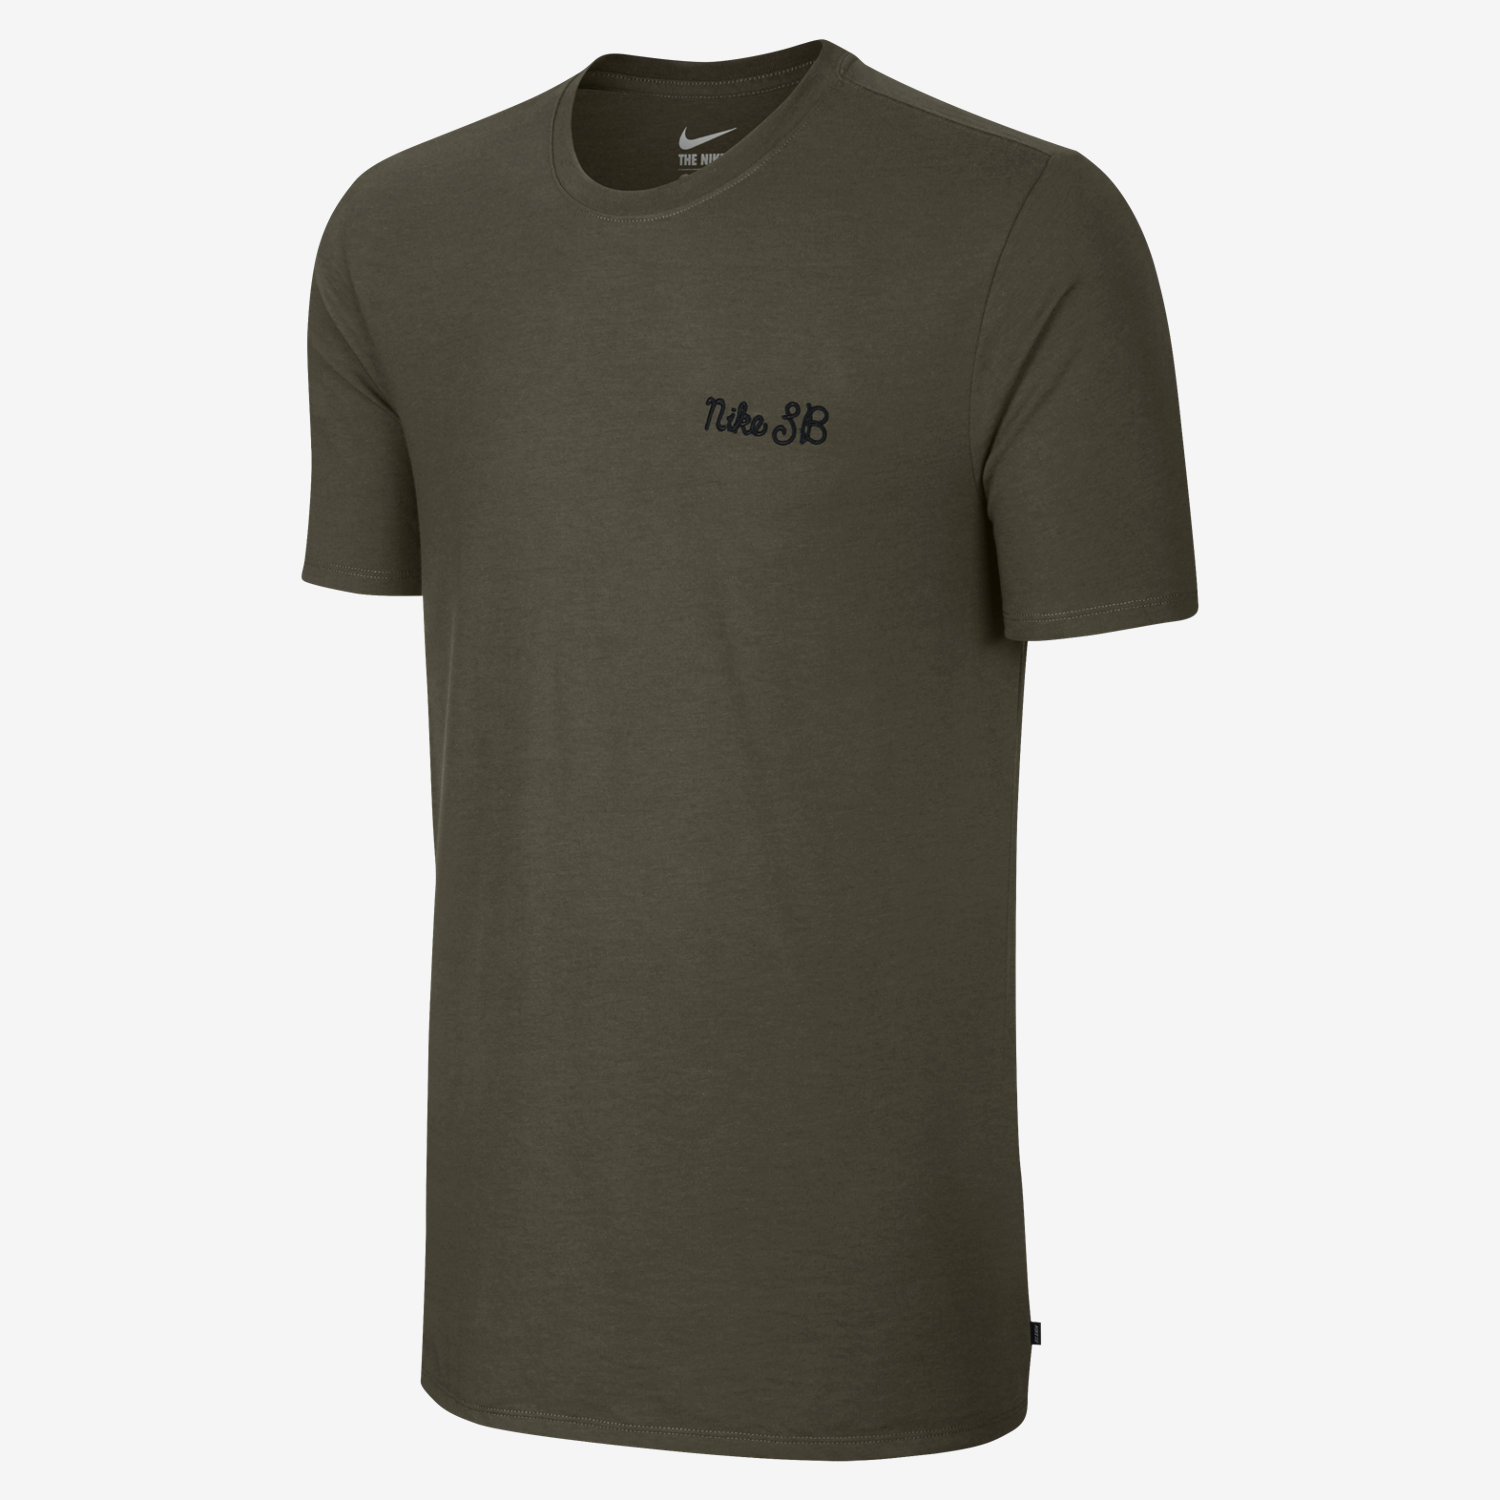 Nike SB Candle - Men's T-Shirt